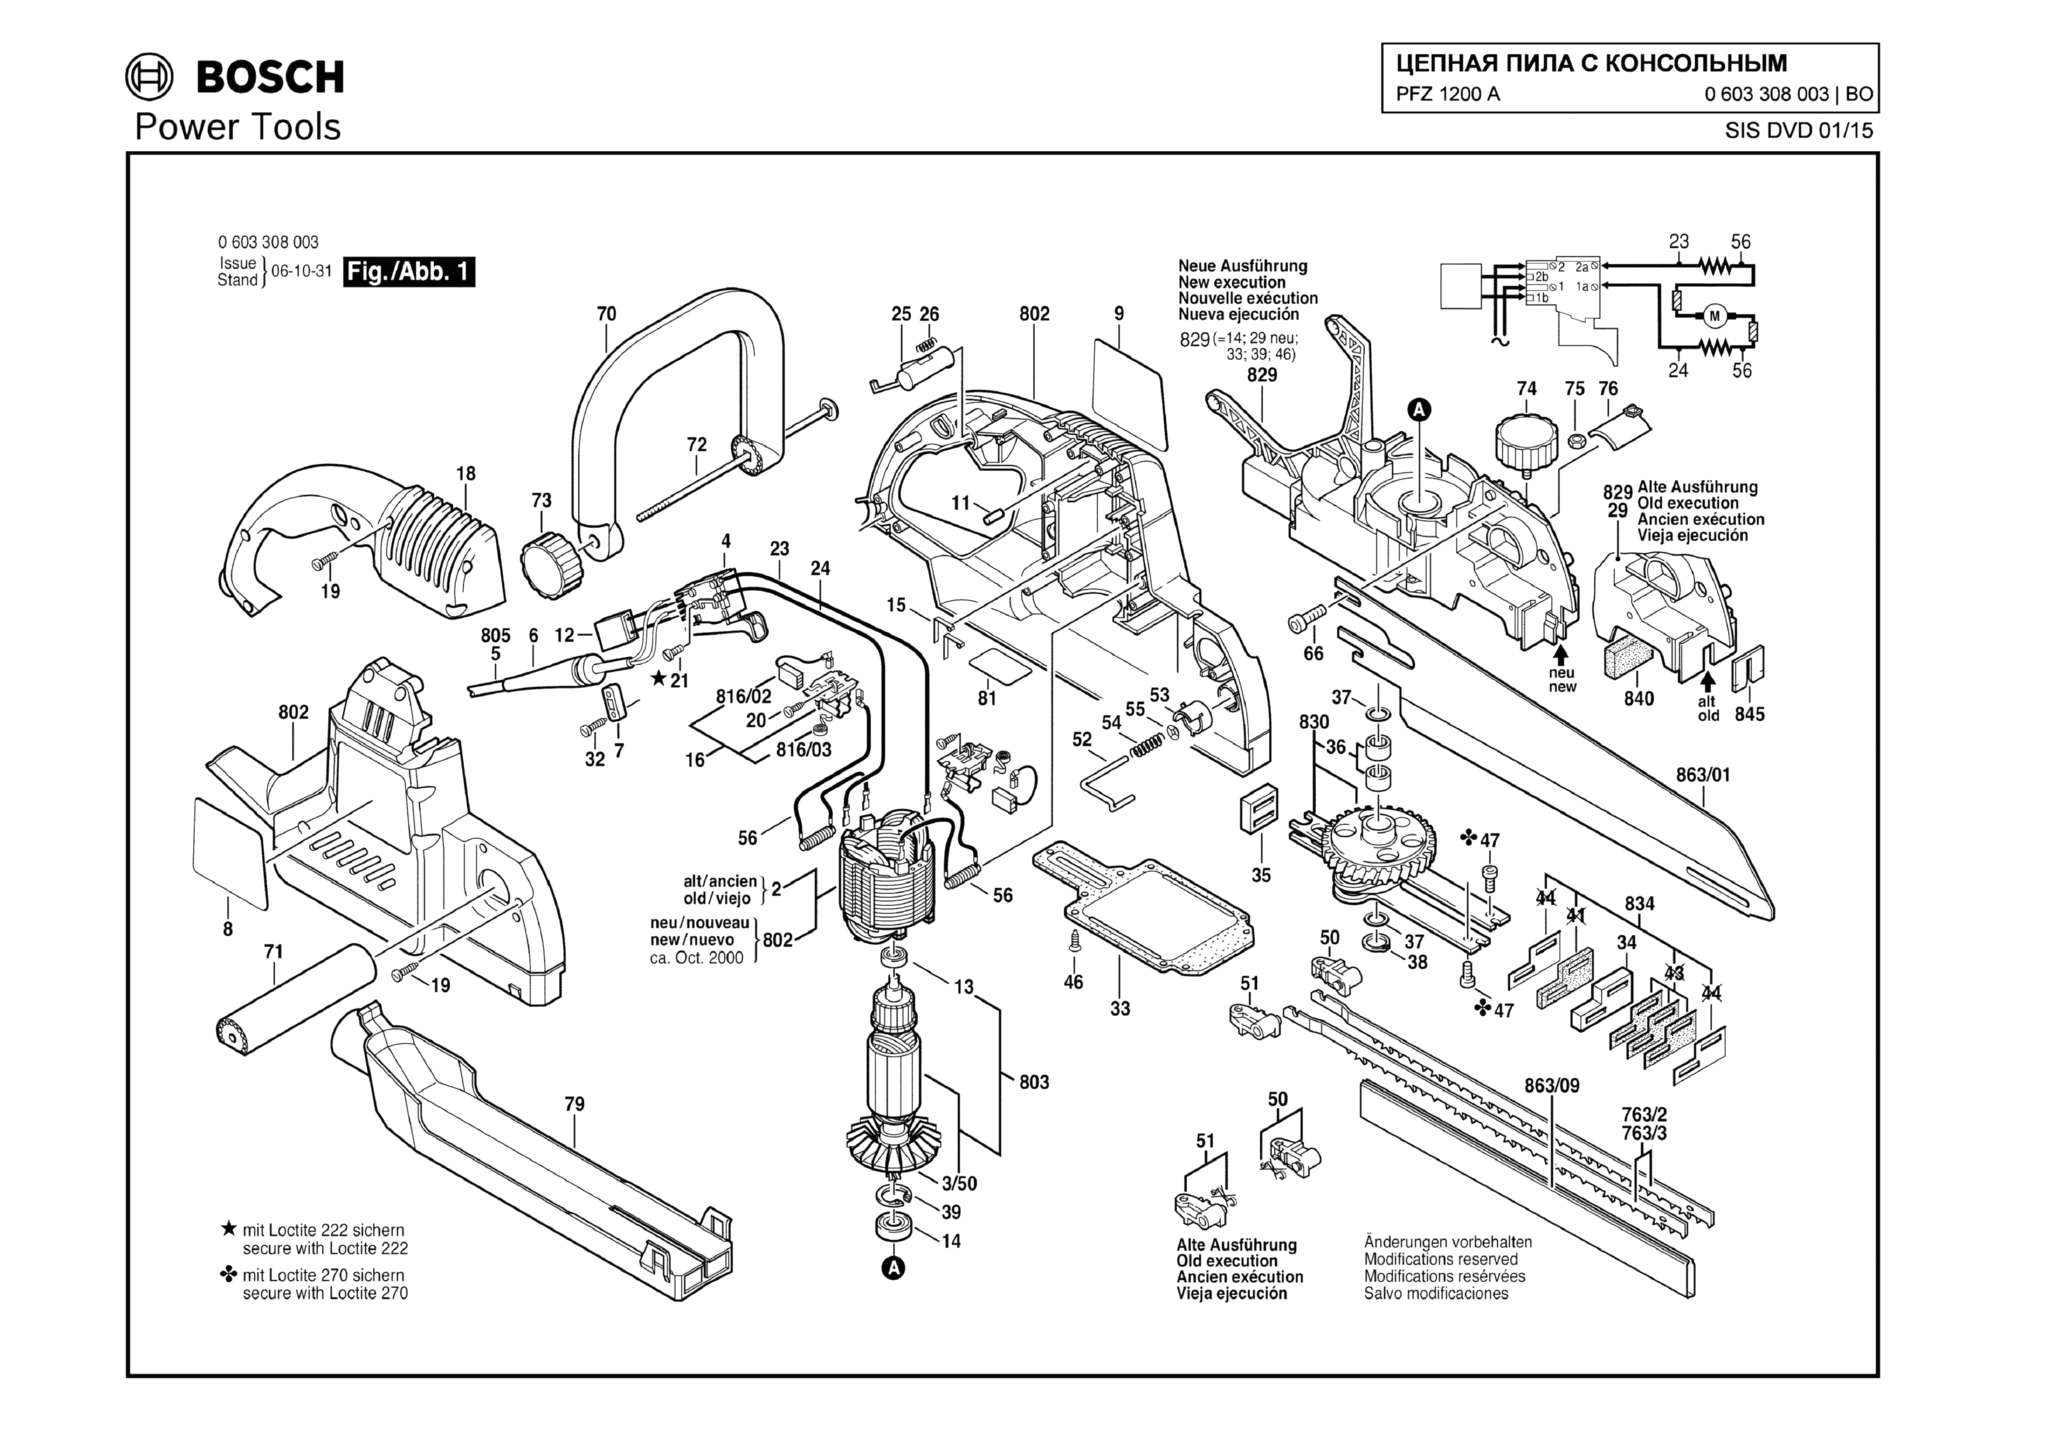 Запчасти, схема и деталировка Bosch PFZ 1200 A (ТИП 0603308003)